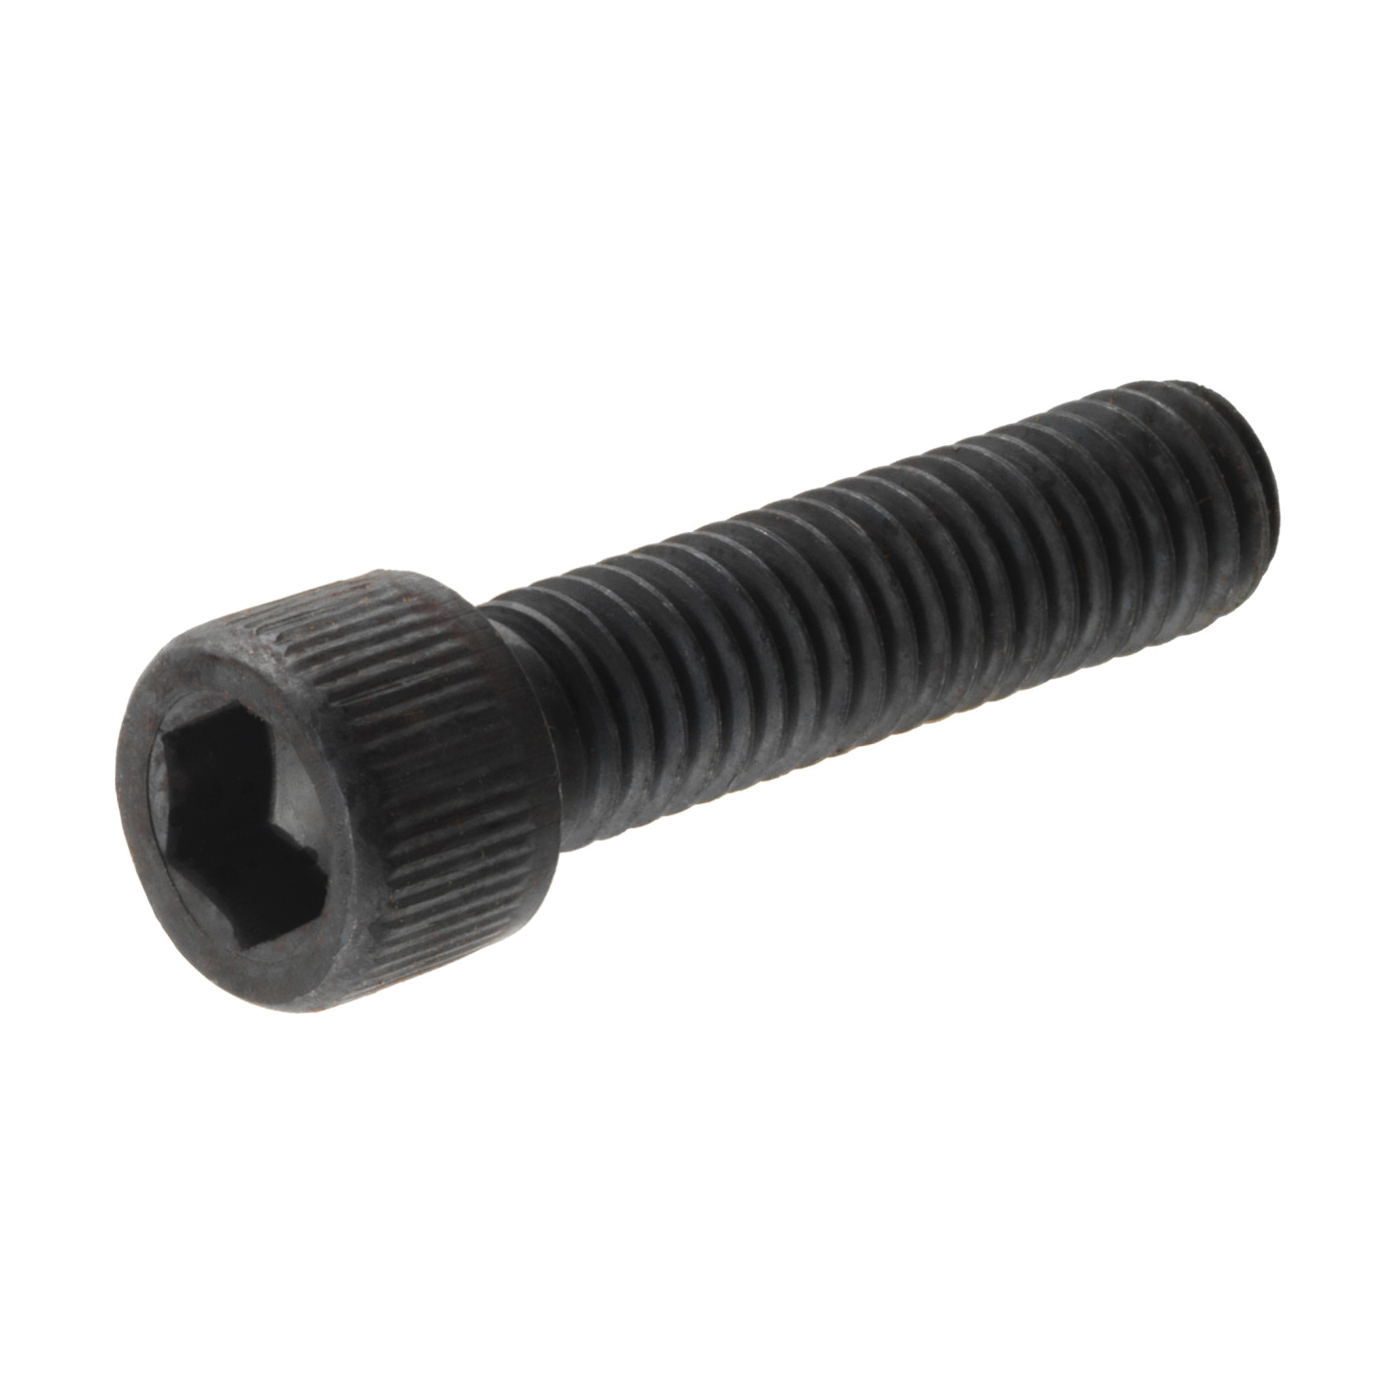 880320 Screw, 5/16-16 Thread, 3/4 in L, Coarse Thread, Socket Drive, Blunt Point, Steel, Black Phosphate, 2 PK